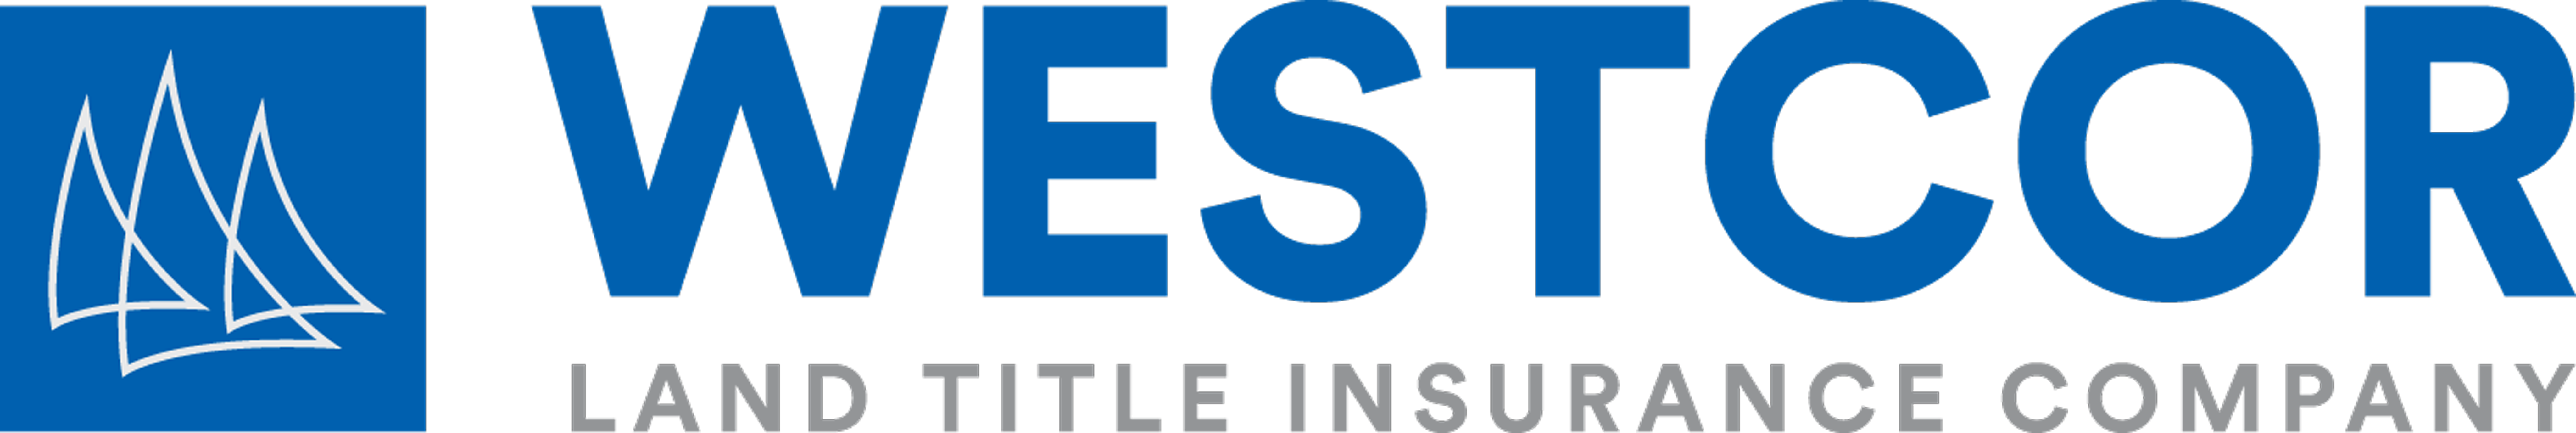 Westcor Land Title Insurance Company Logo